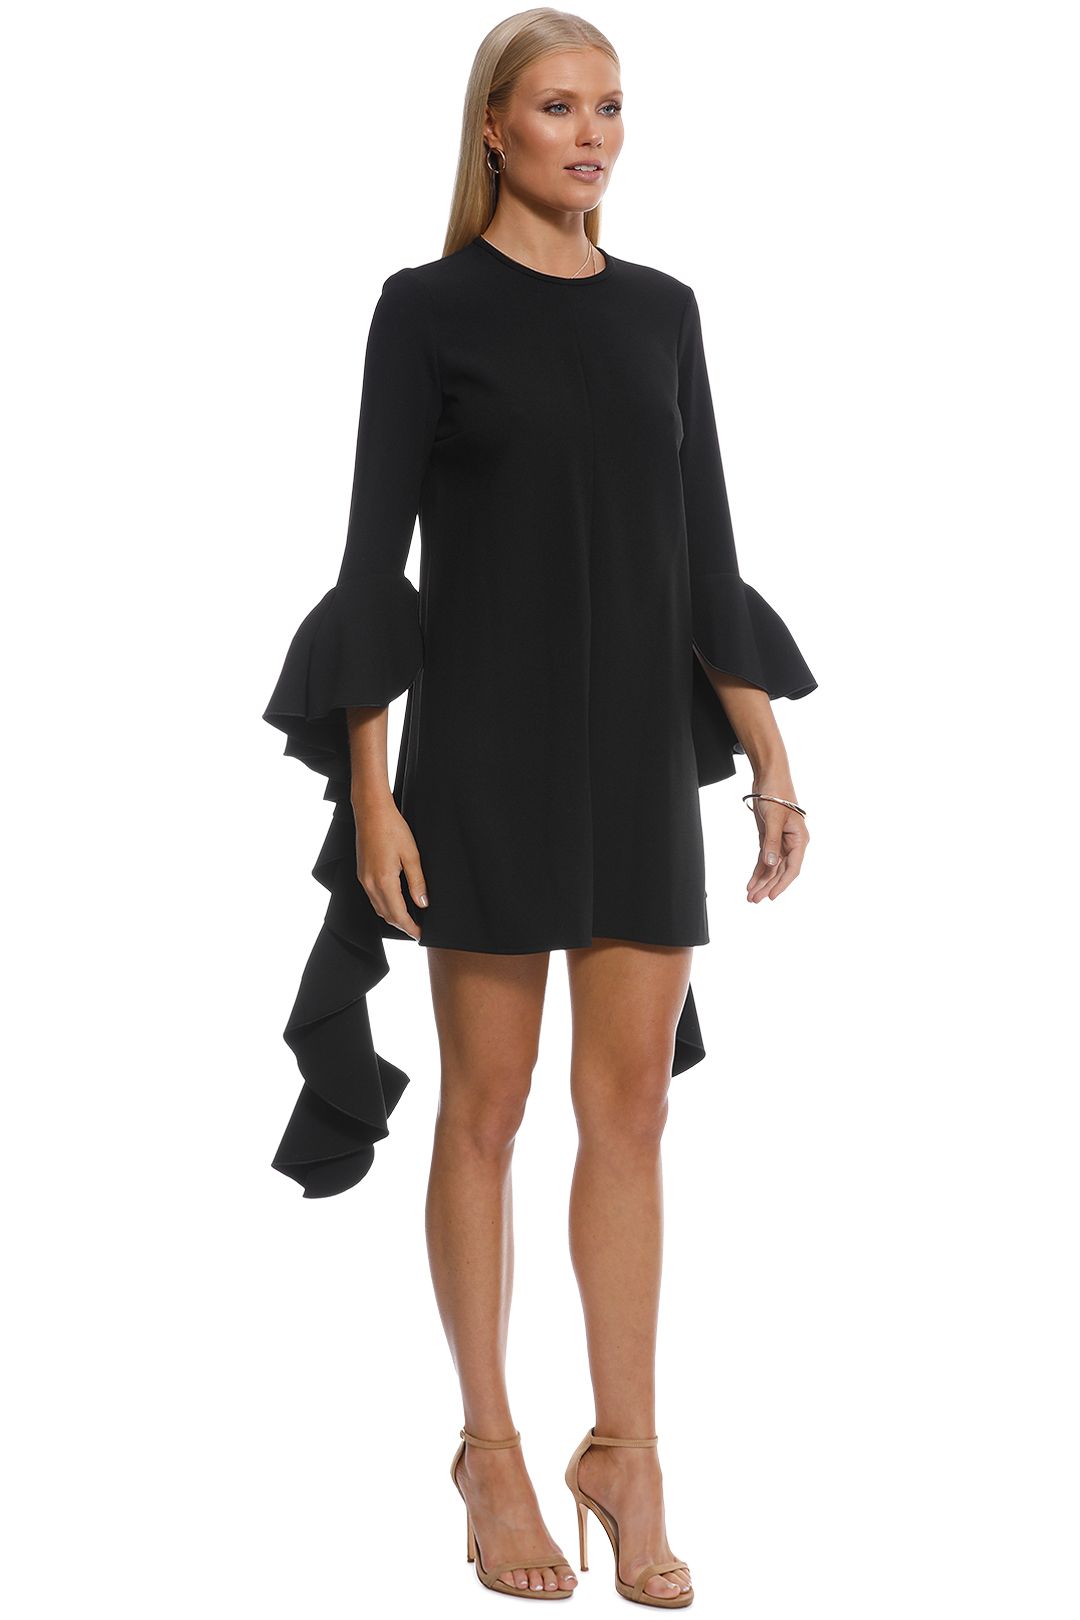 Ellery - Kilkenny Frill Sleeve Mini Dress - Black - Side